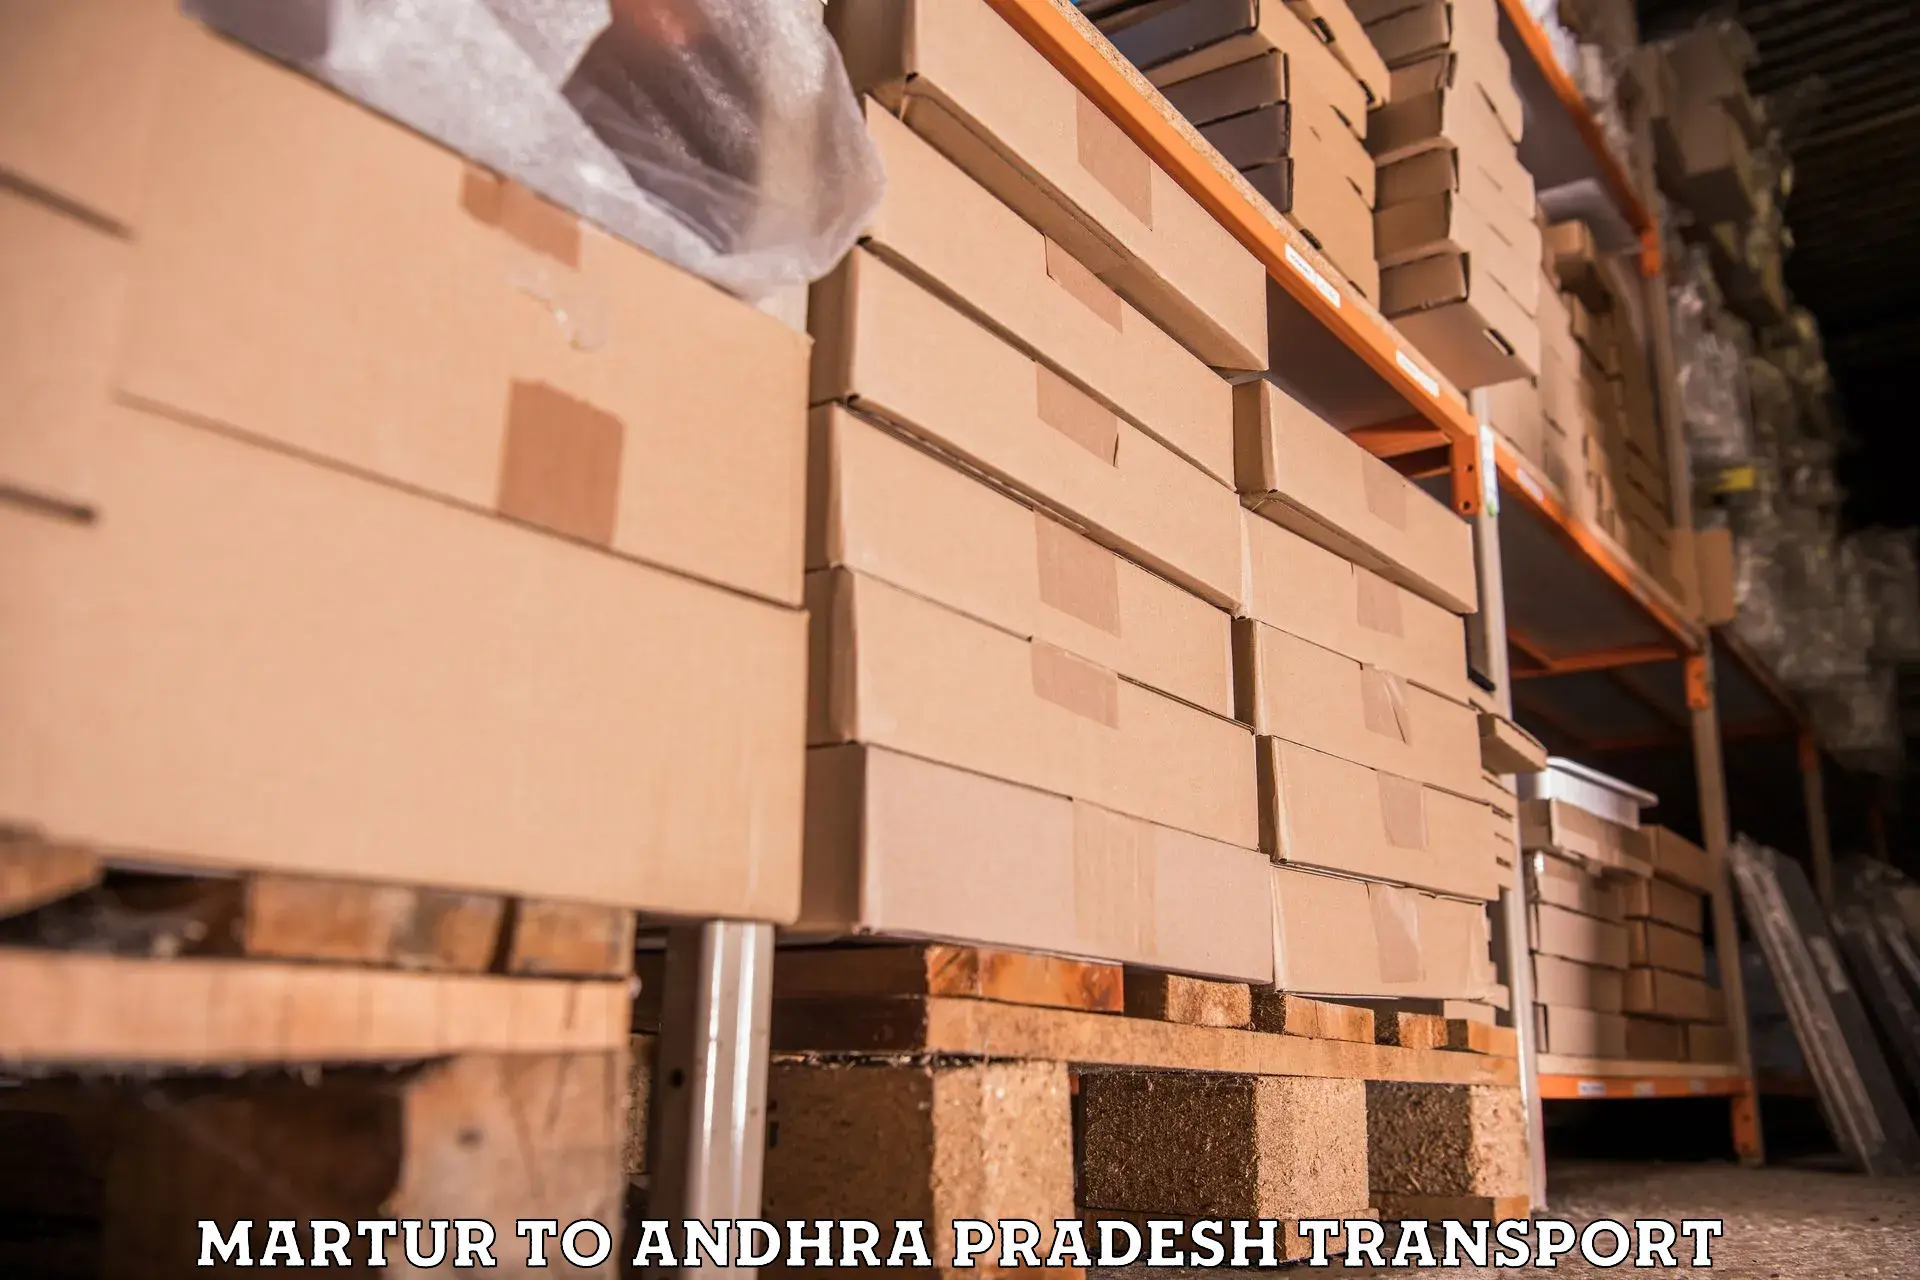 Furniture transport service Martur to Chodavaram